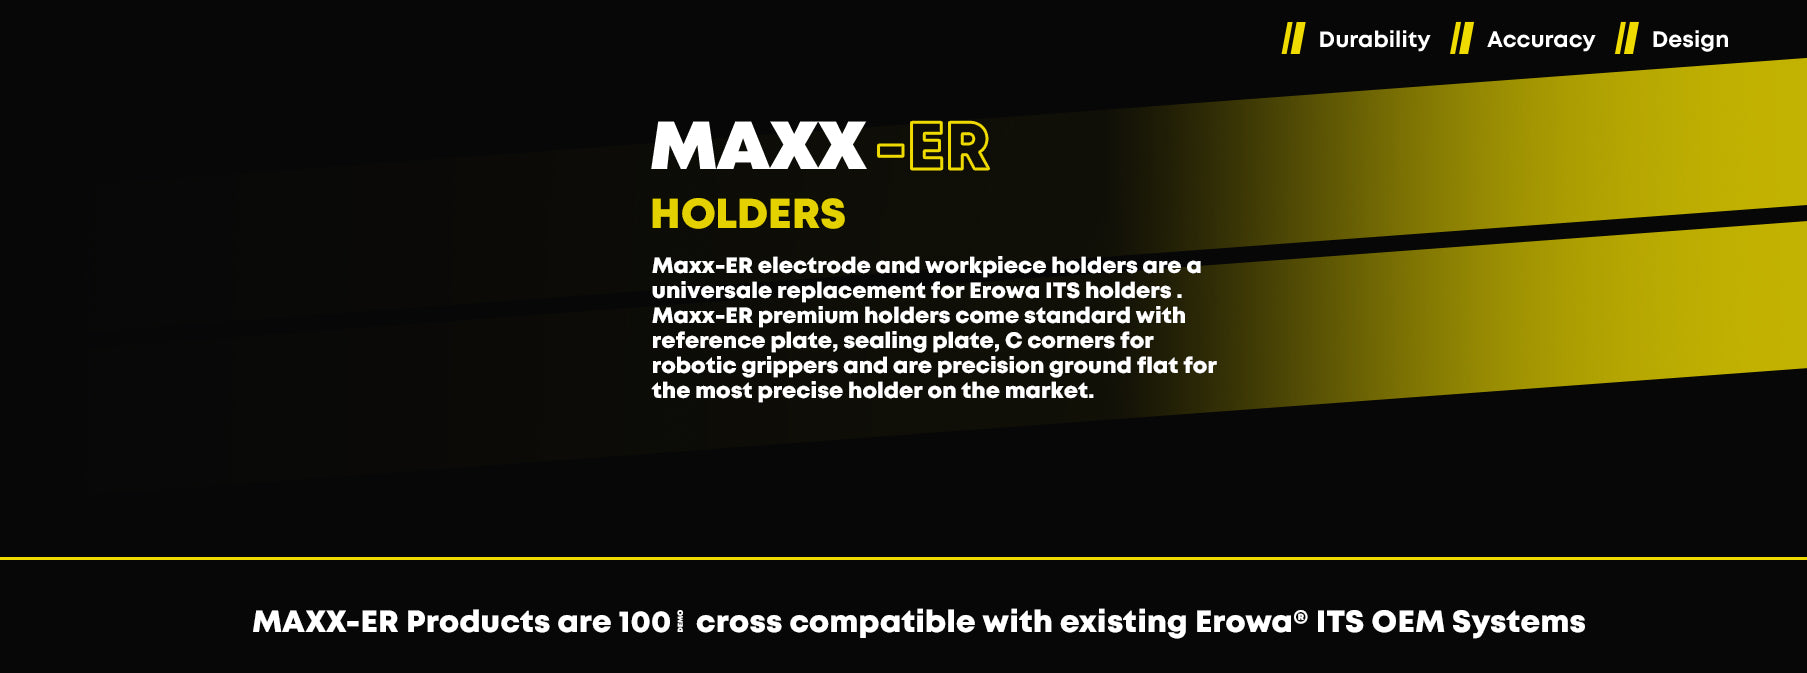 Maxx-ER Supports, supports Erowa